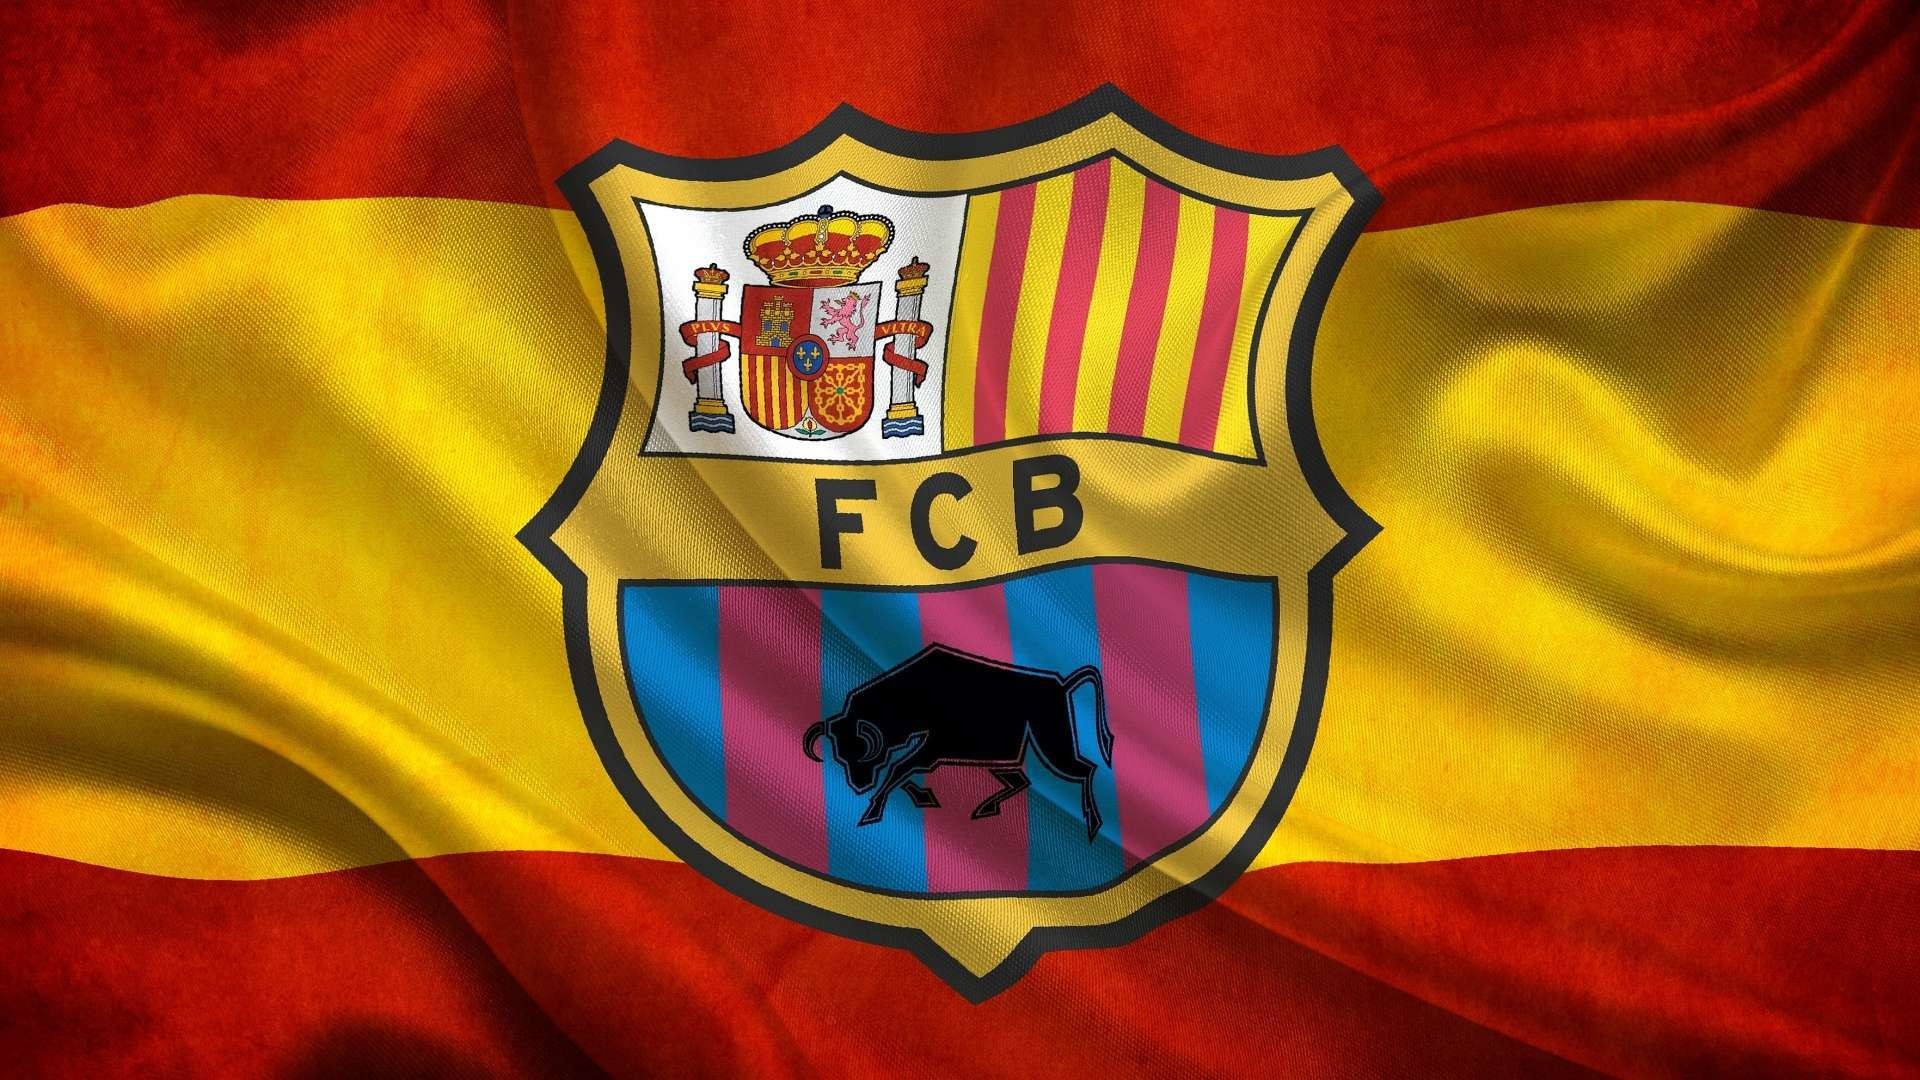 1920x1080 Wallpaper: Flag Fc Barcelona Barca Spain Hd Wallpaper 1080p. Upload at .